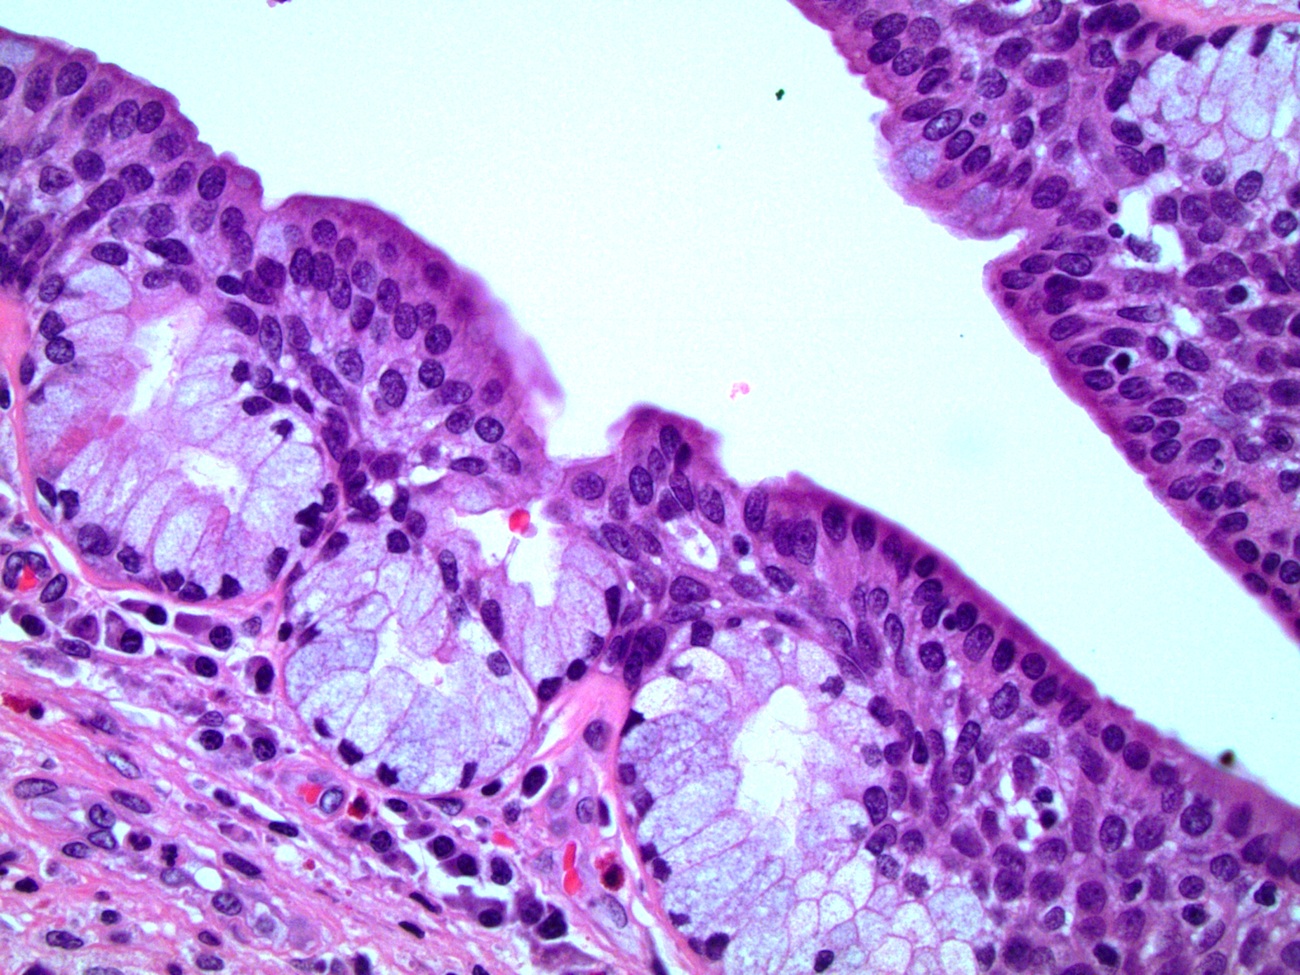 Penile intraepithelial (juxtaepithelial) glands